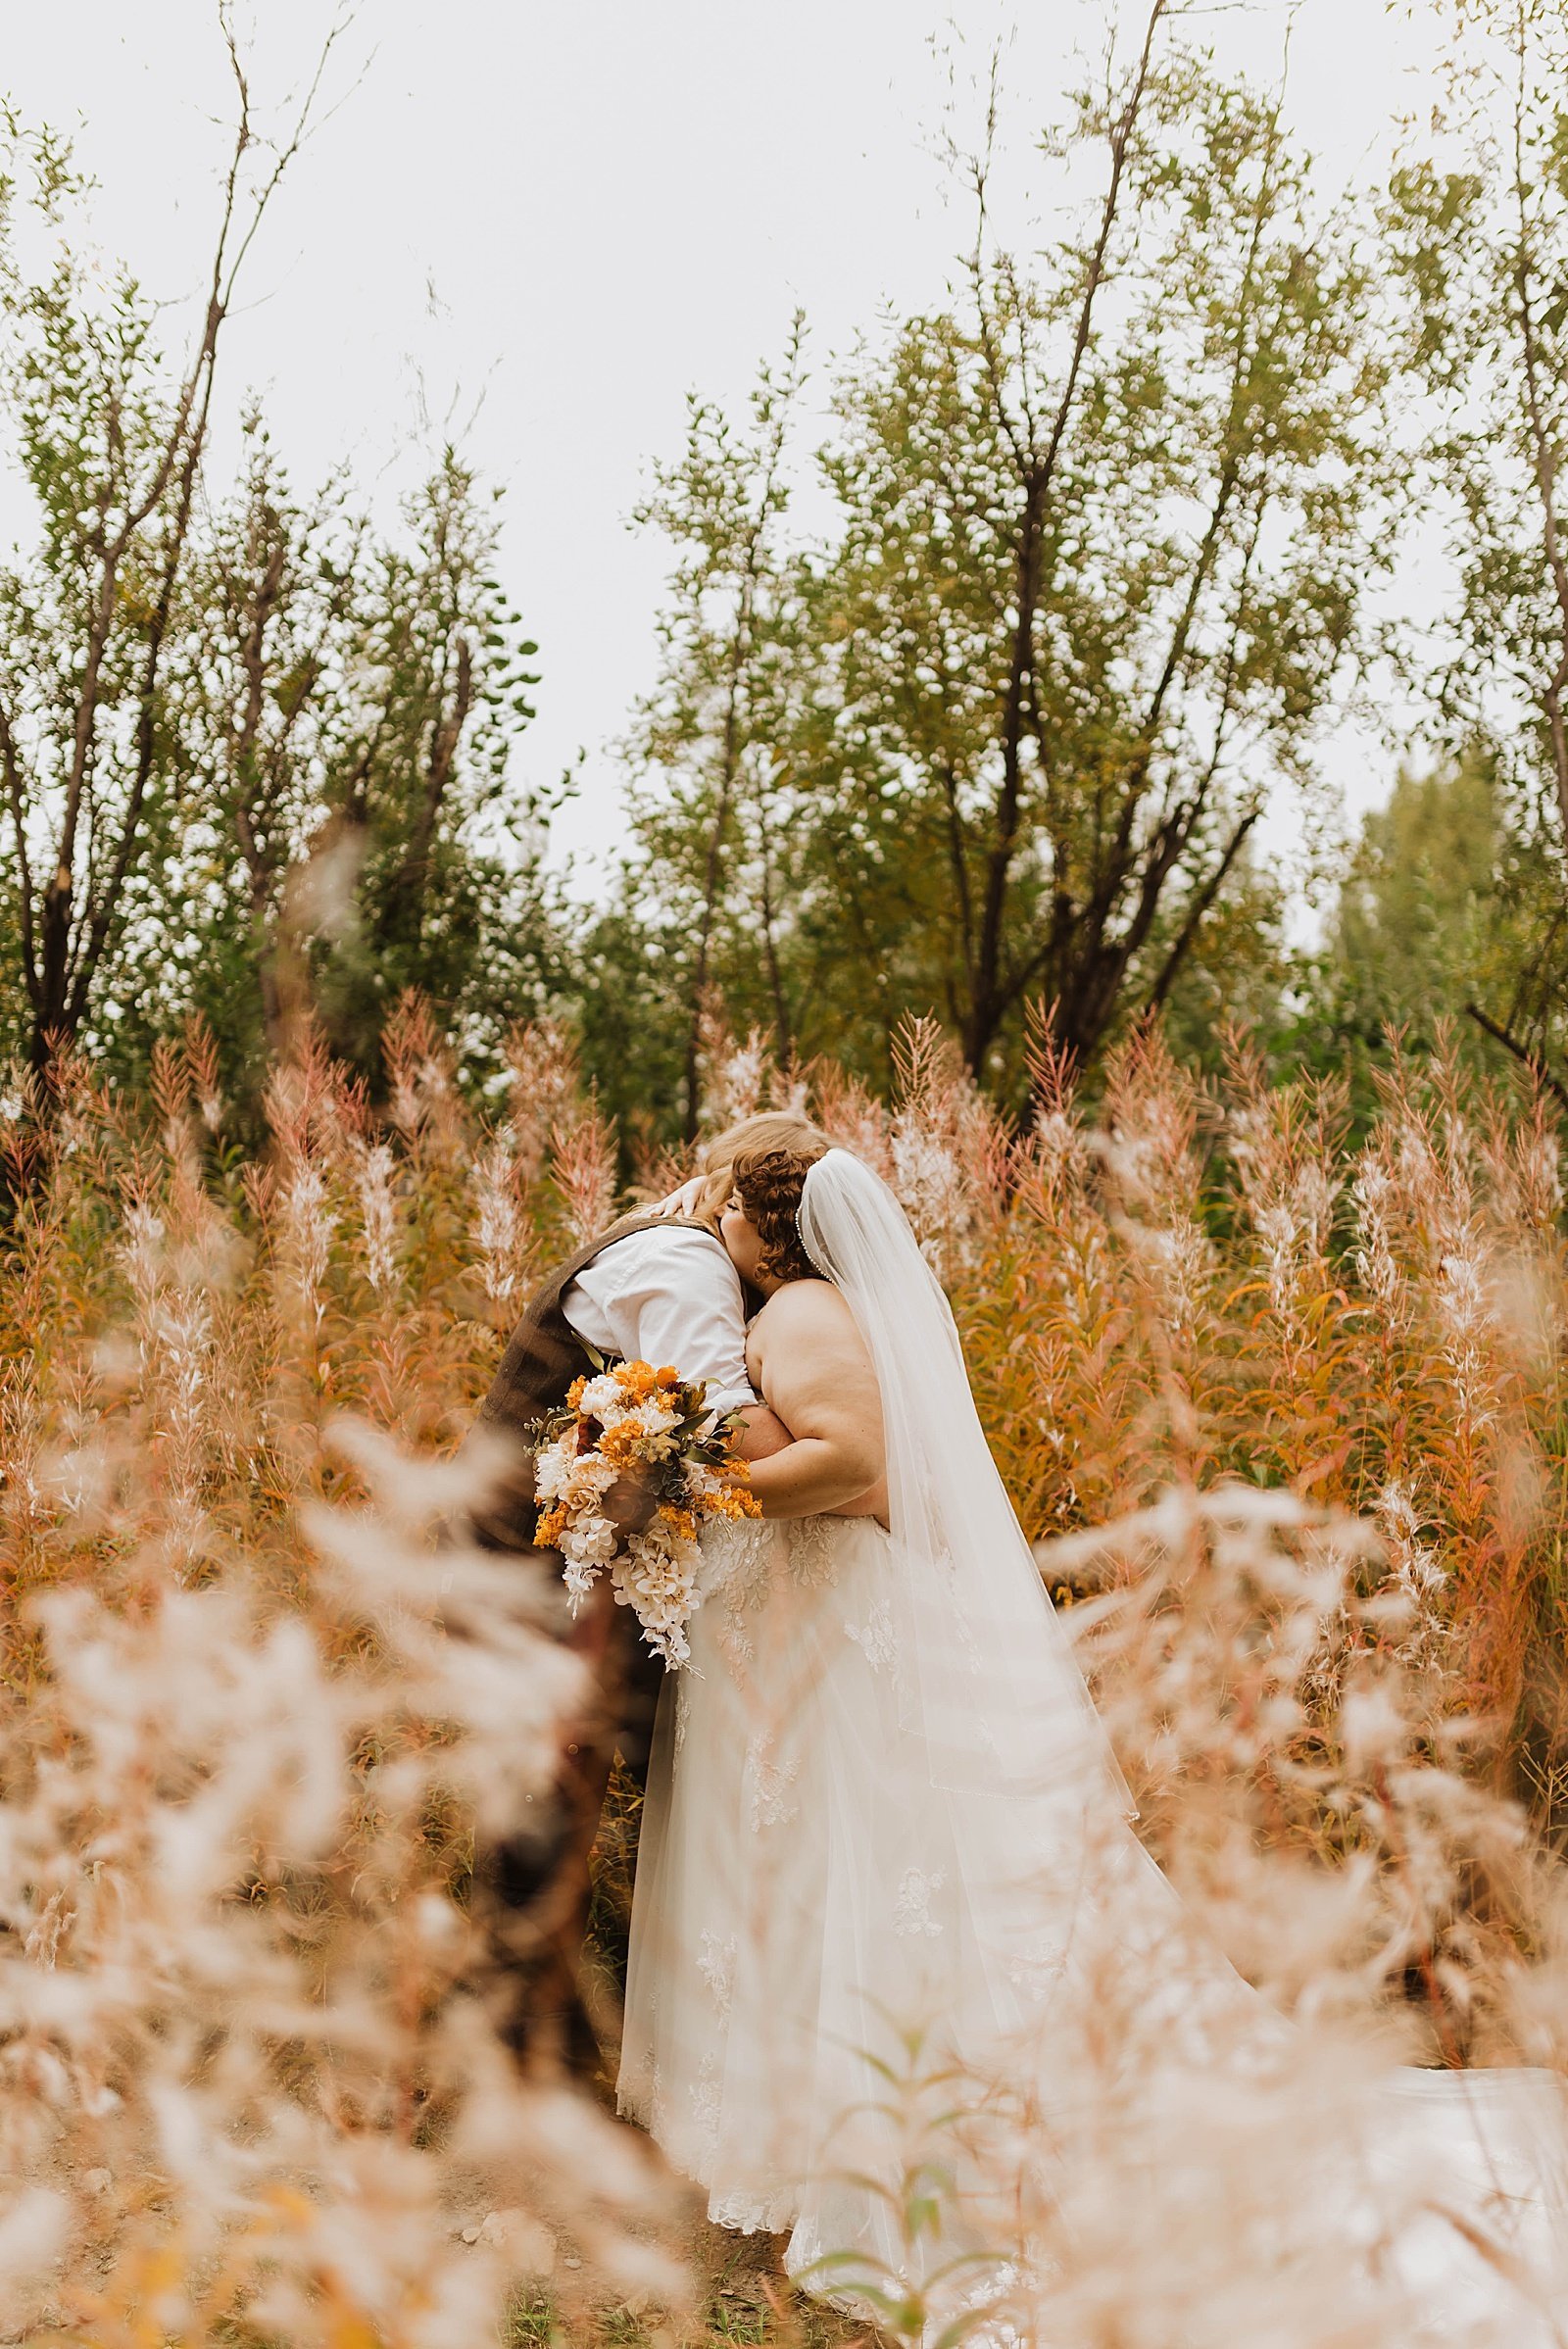  Newlyweds embracing in a field by Alaska wedding photographer, Theresa McDonald 